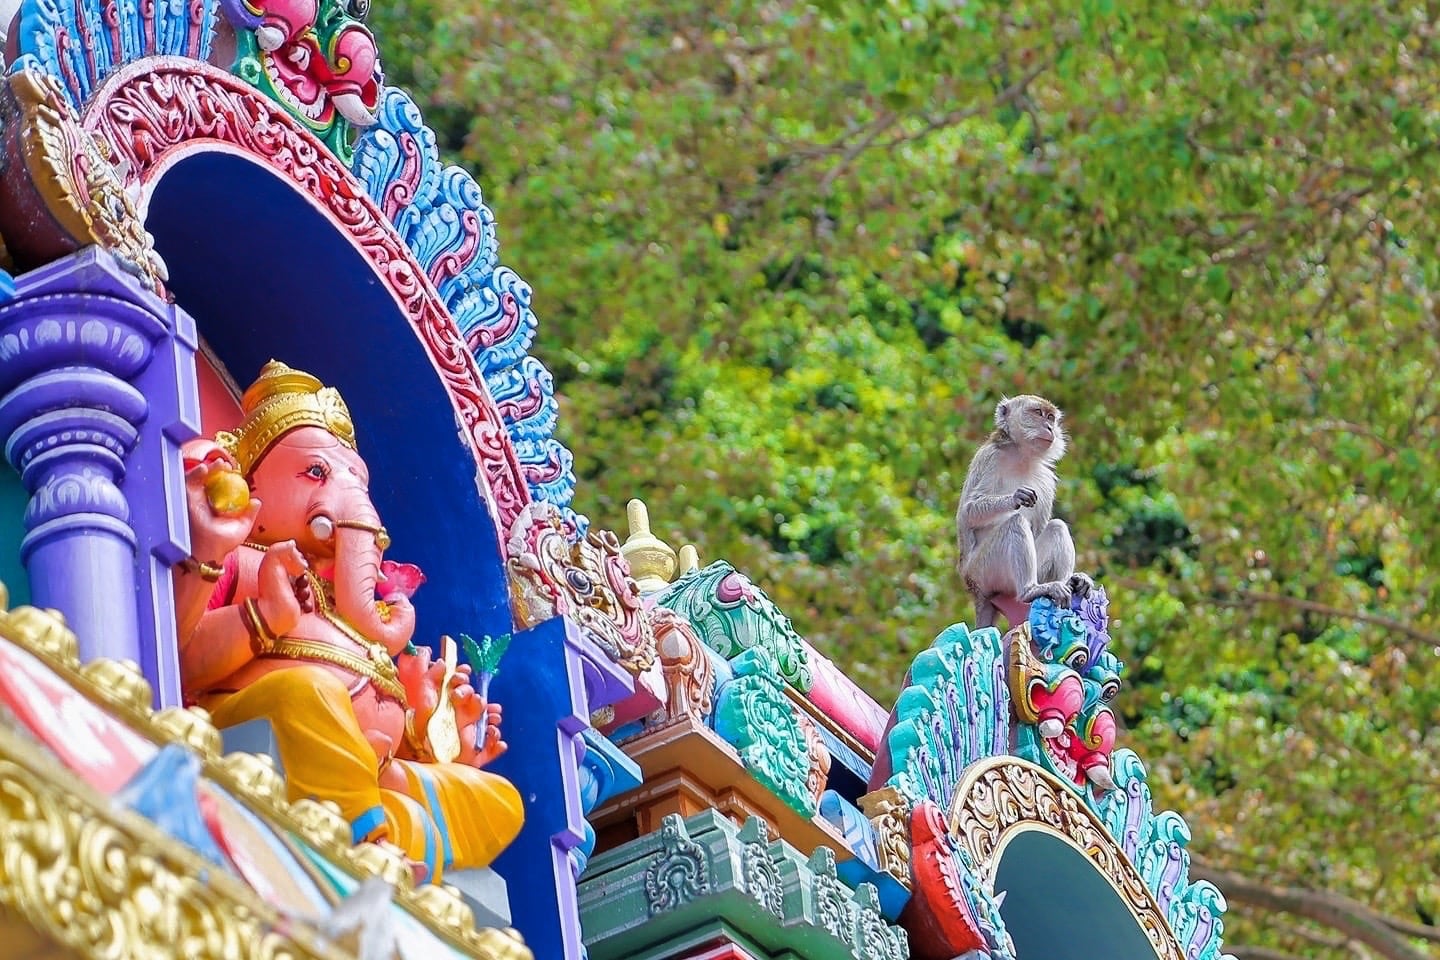 Monkey on colorful Hindu shrine in Malaysia